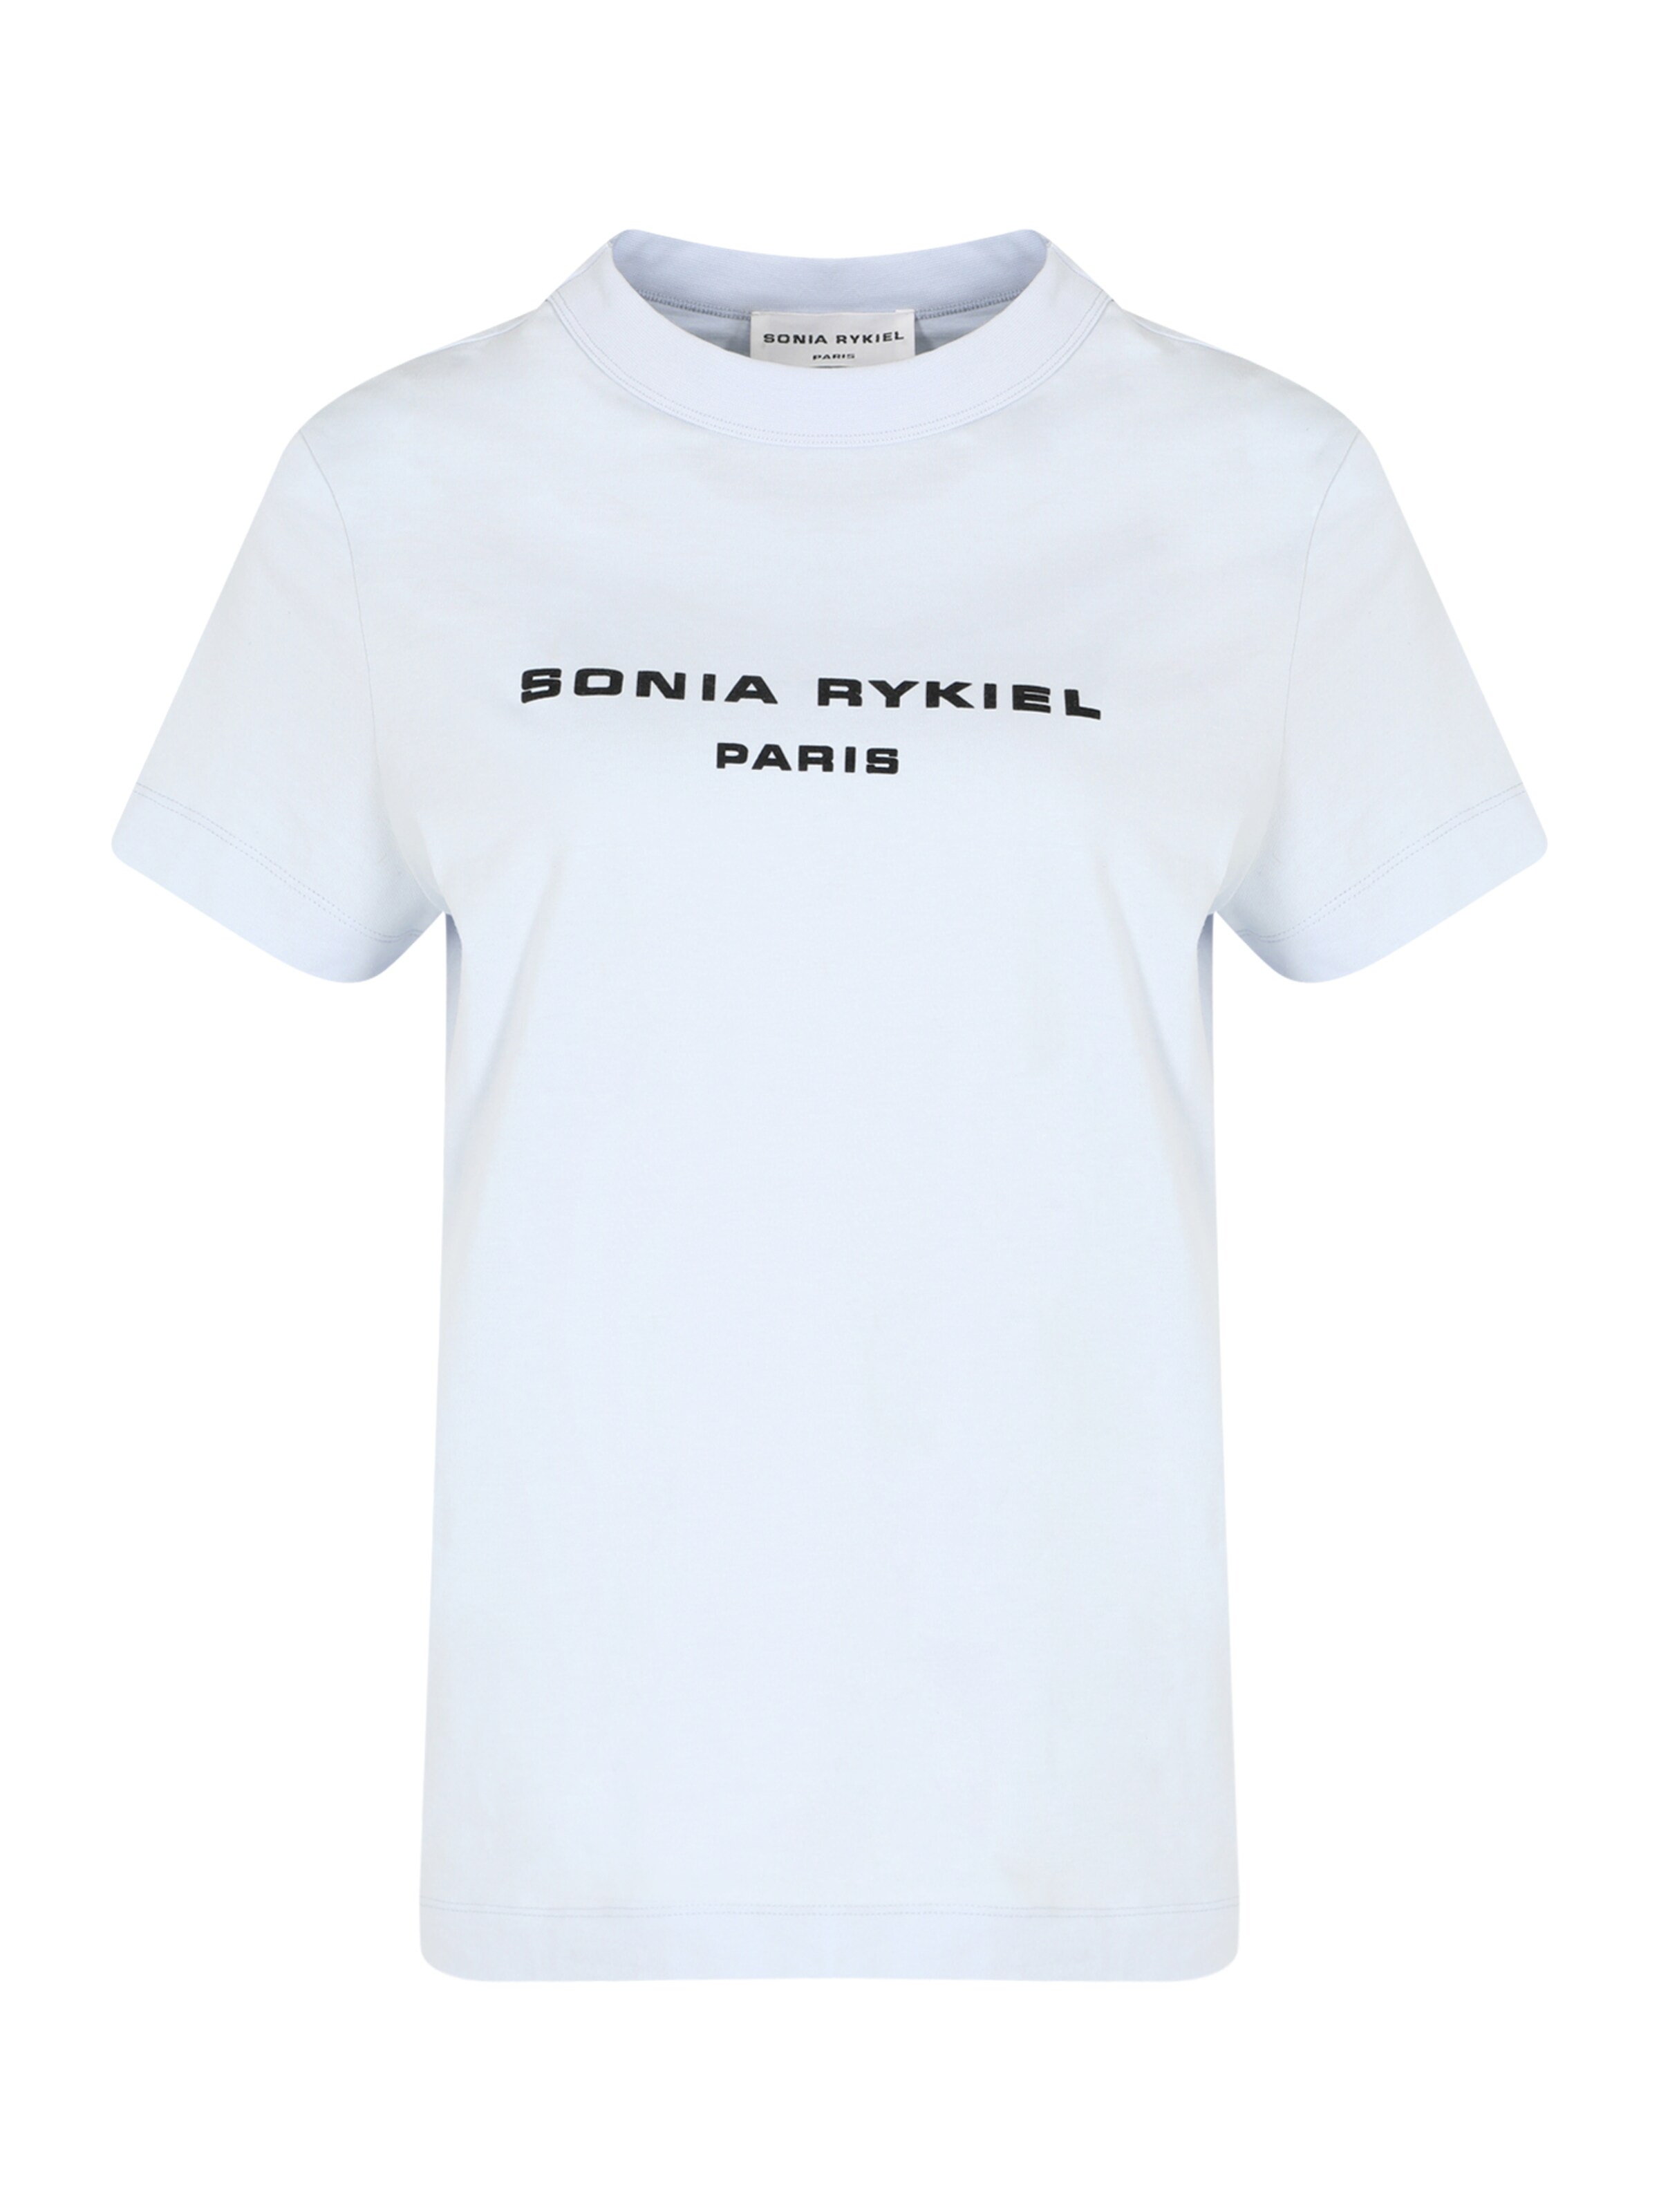 Kleding Gender-neutrale kleding volwassenen Tops & T-shirts T-shirts T-shirts met print RYKIEL HOMME Pyjamas By Sonia Rykiel Stripes Tshirt 